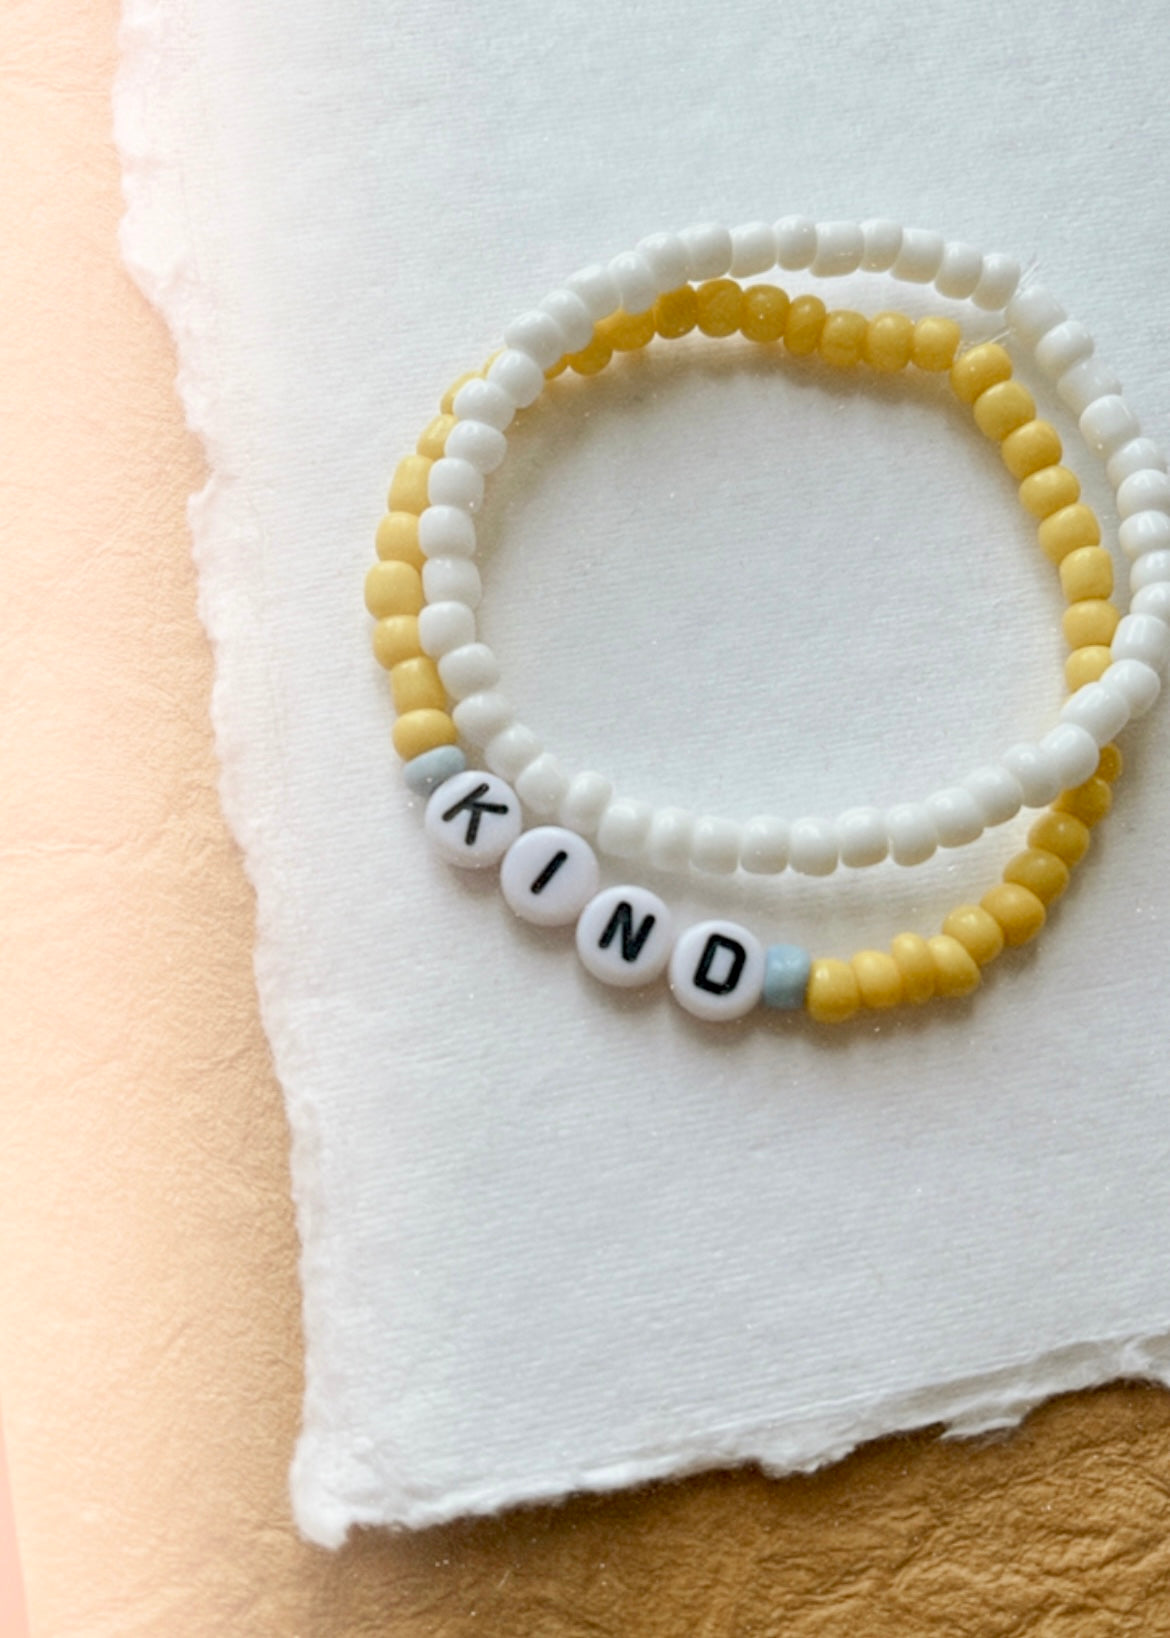 VSCO Friendship Bracelets: 2 Pc Set | eBay